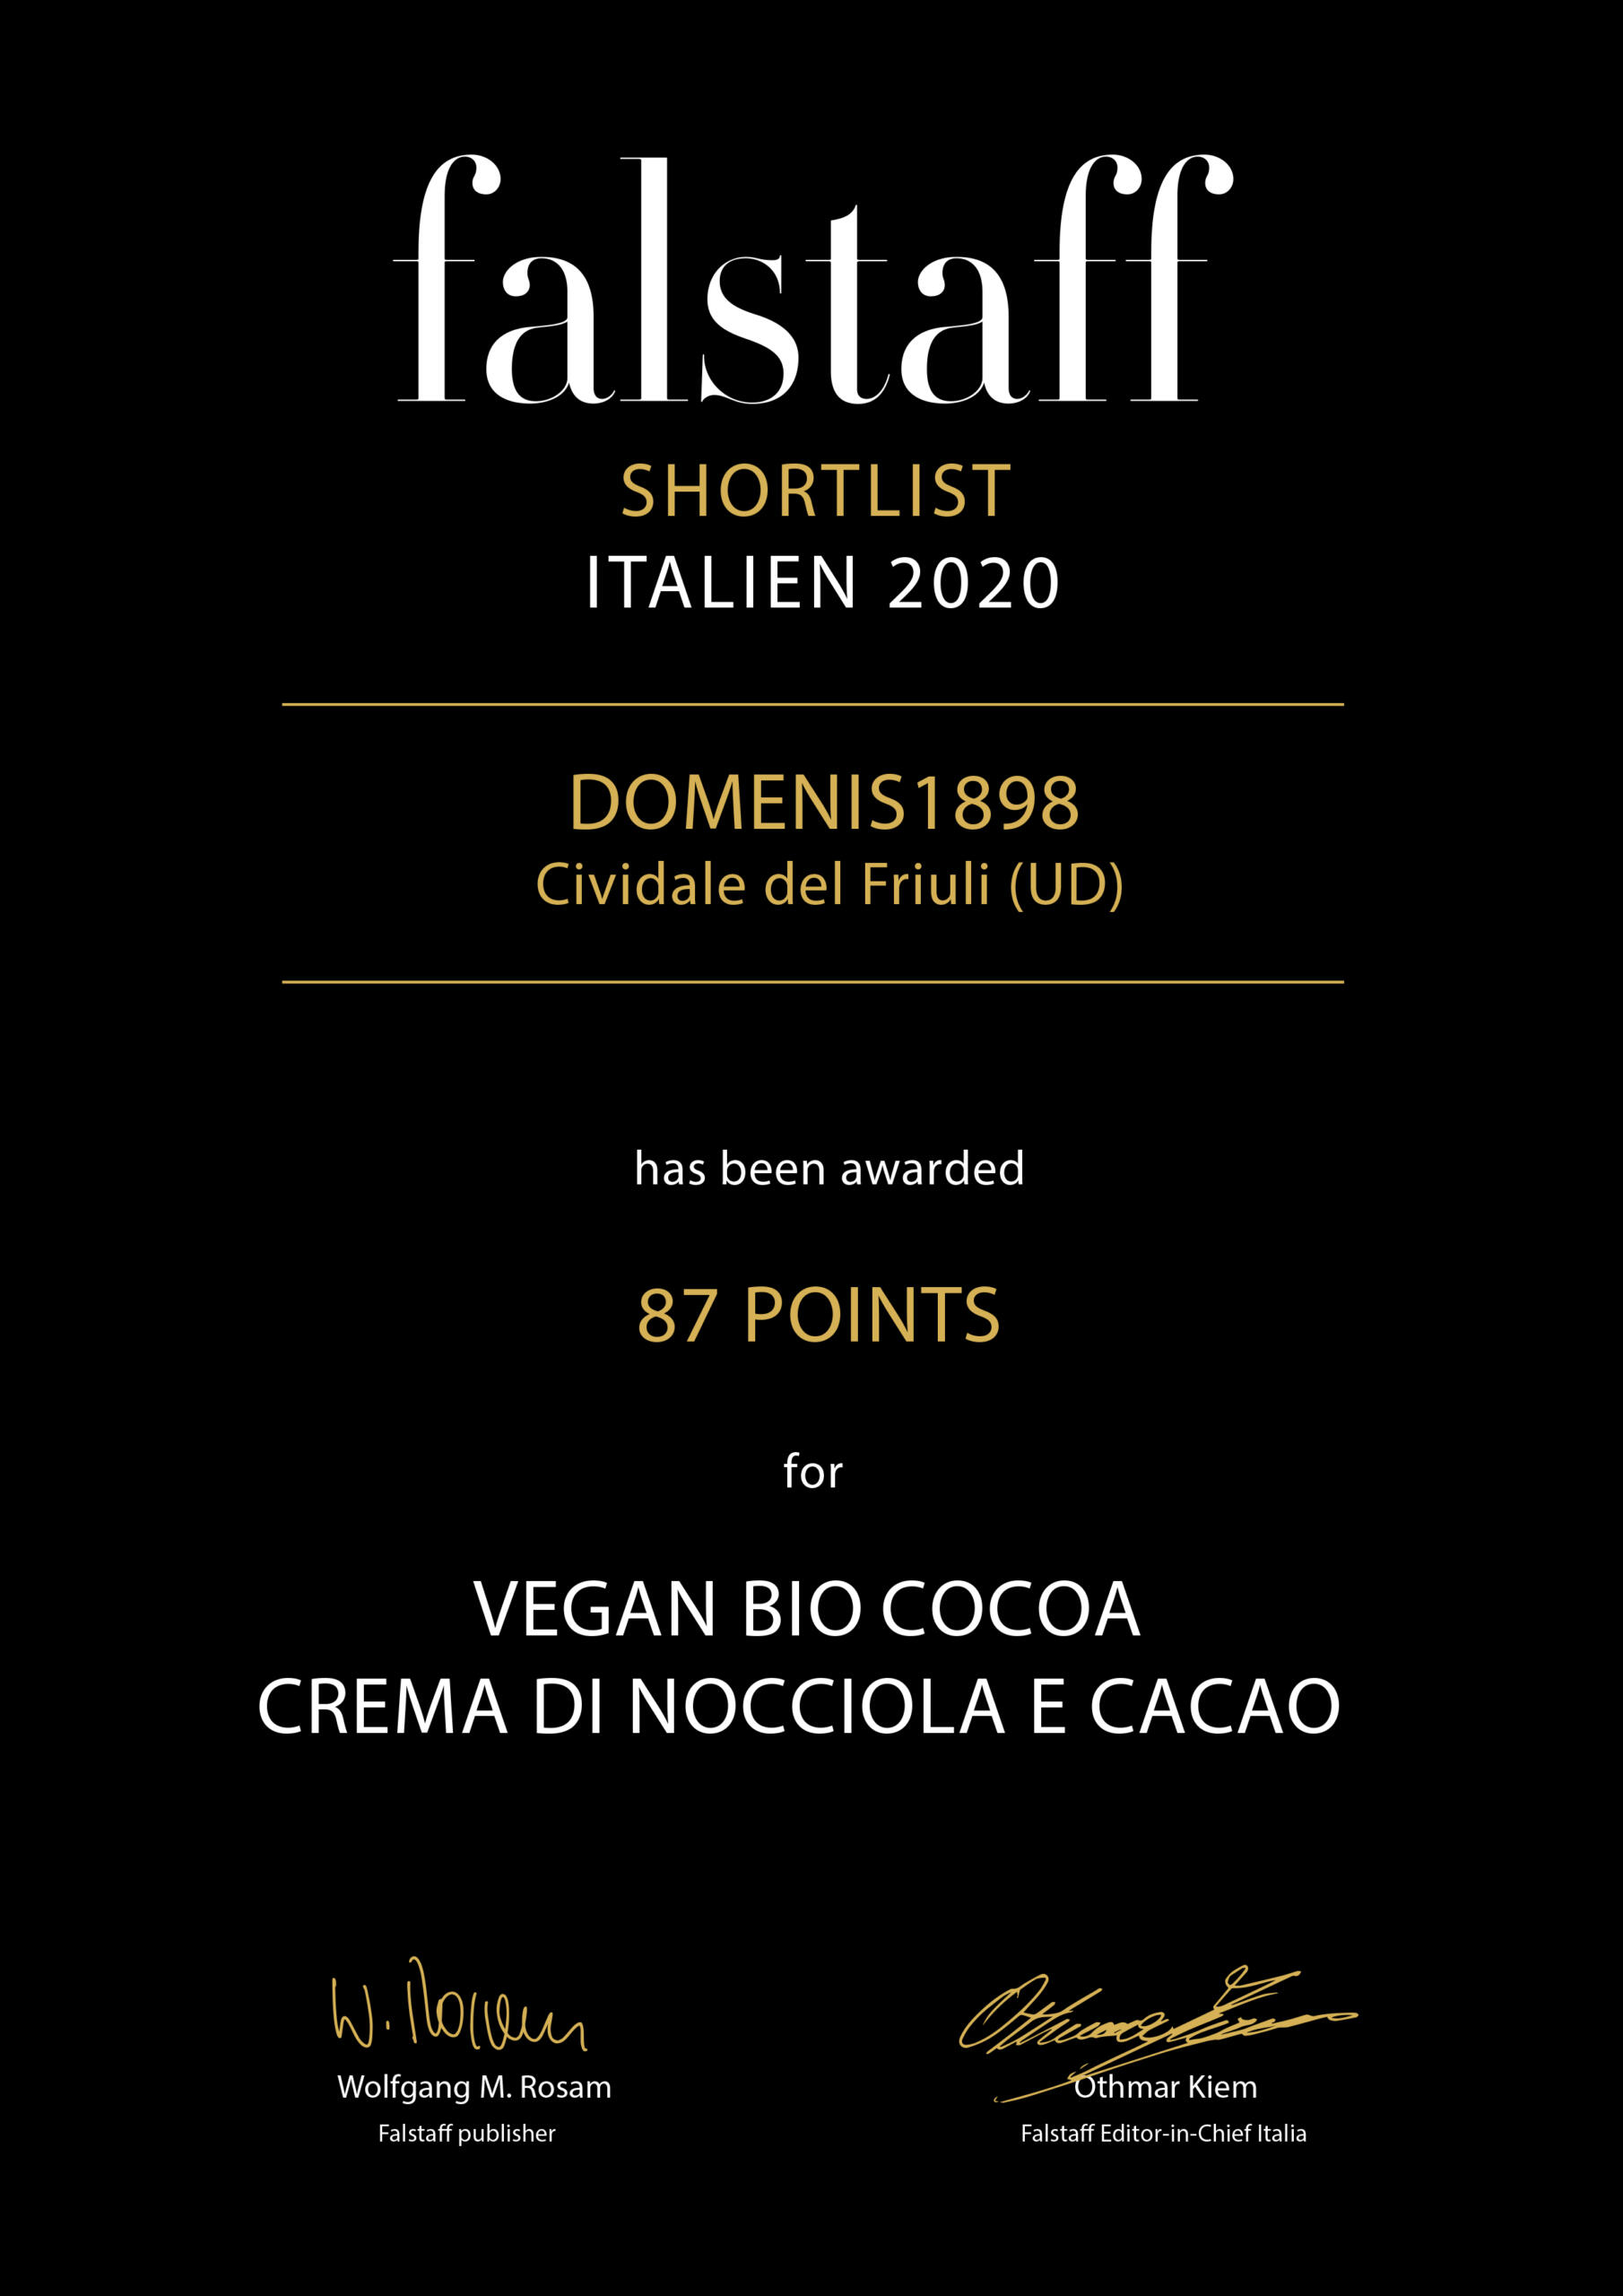 Falstaff Shortlist Italien 2020 – Vegan Cocoa